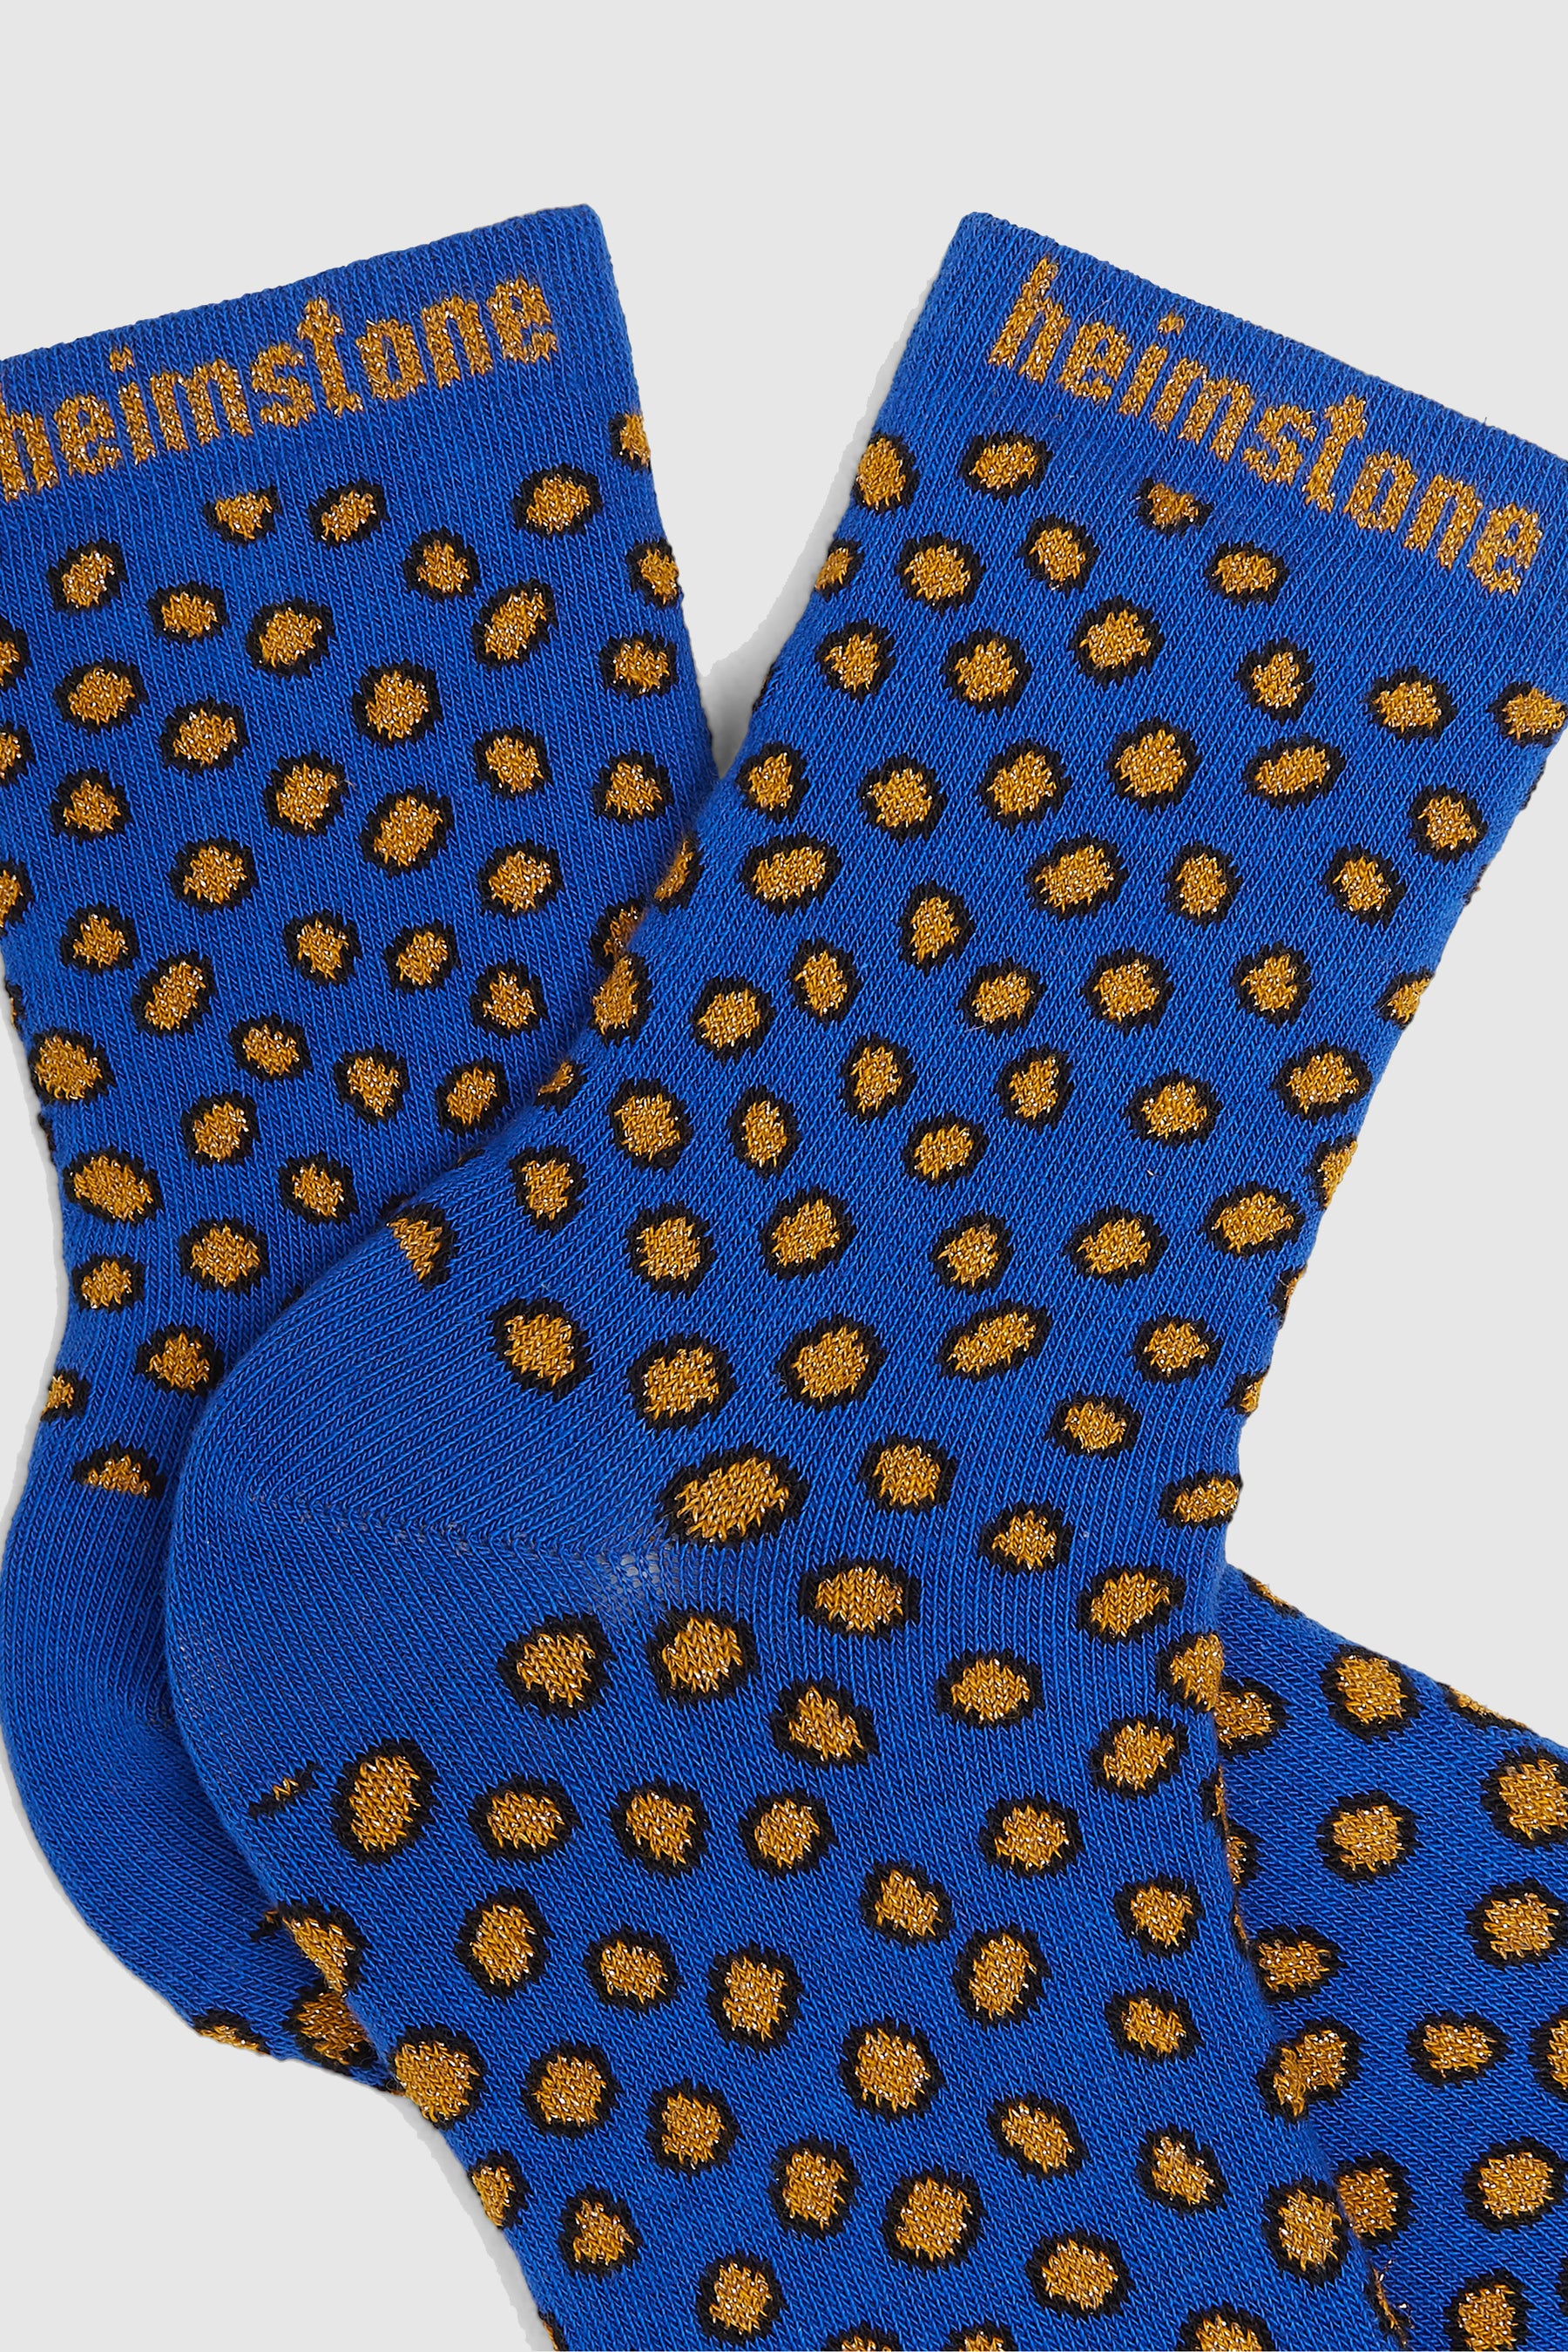 Knee socks in navy blue Messy Dots print